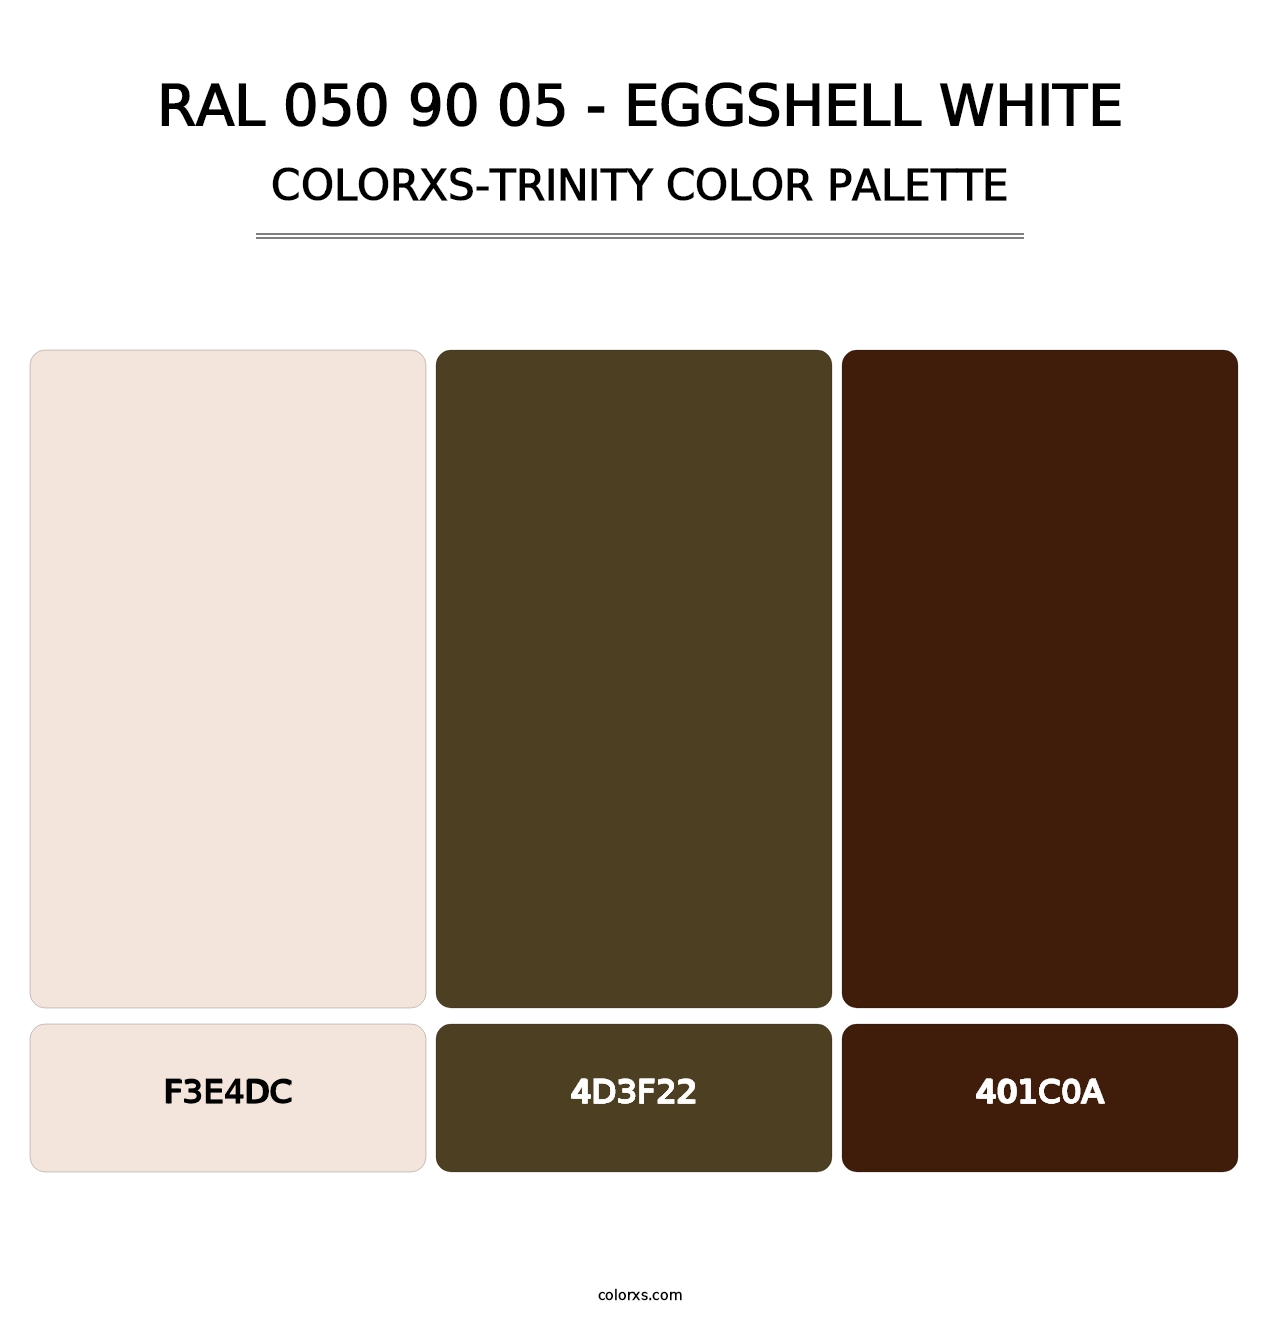 RAL 050 90 05 - Eggshell White - Colorxs Trinity Palette